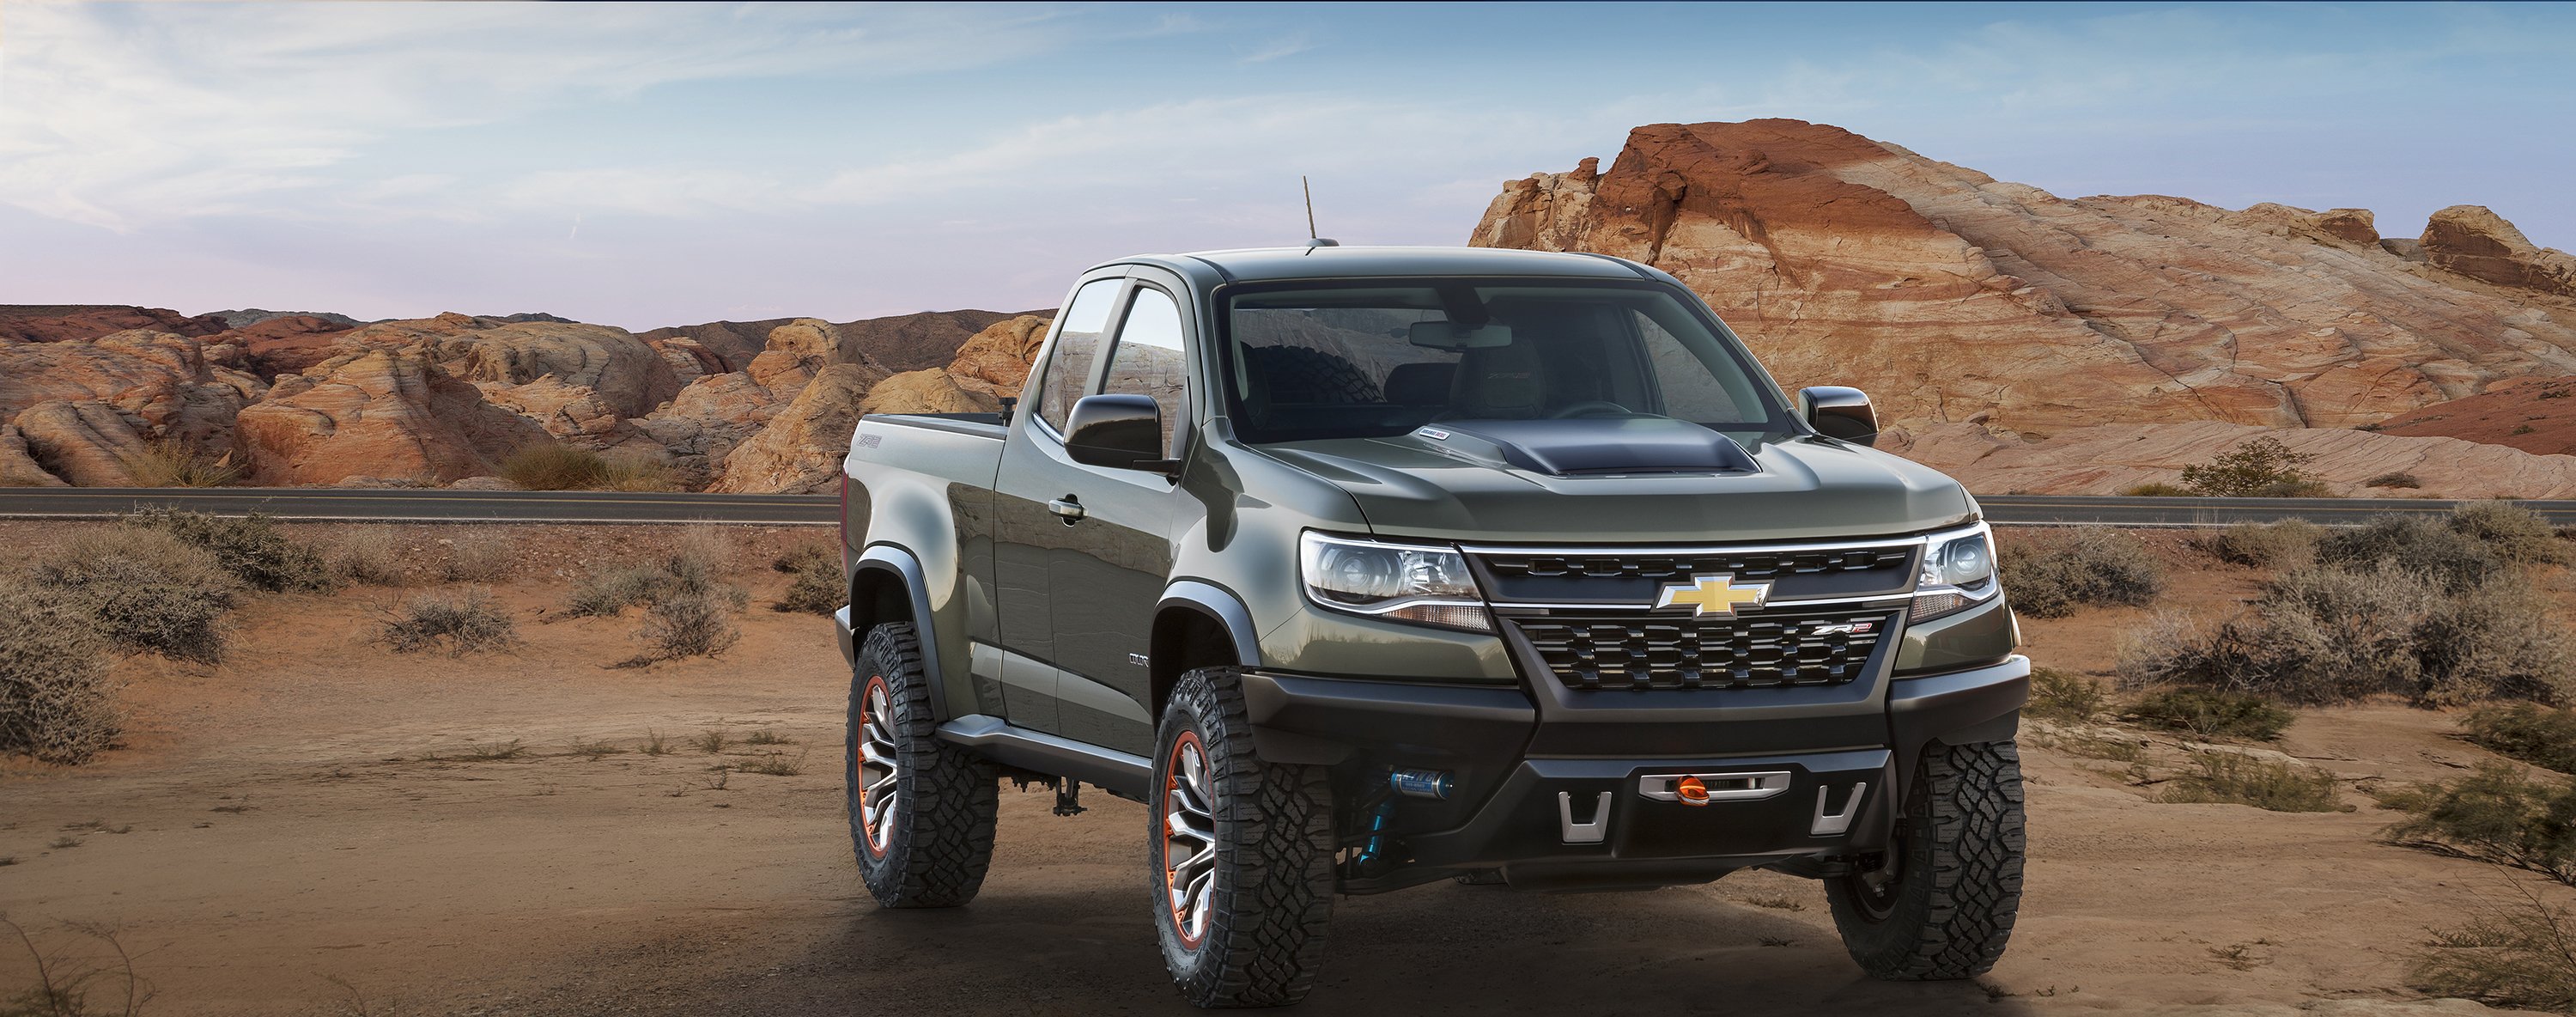 2014, Chevrolet, Colorado, Zr2, Concept, Pickup, 4x4 Wallpaper